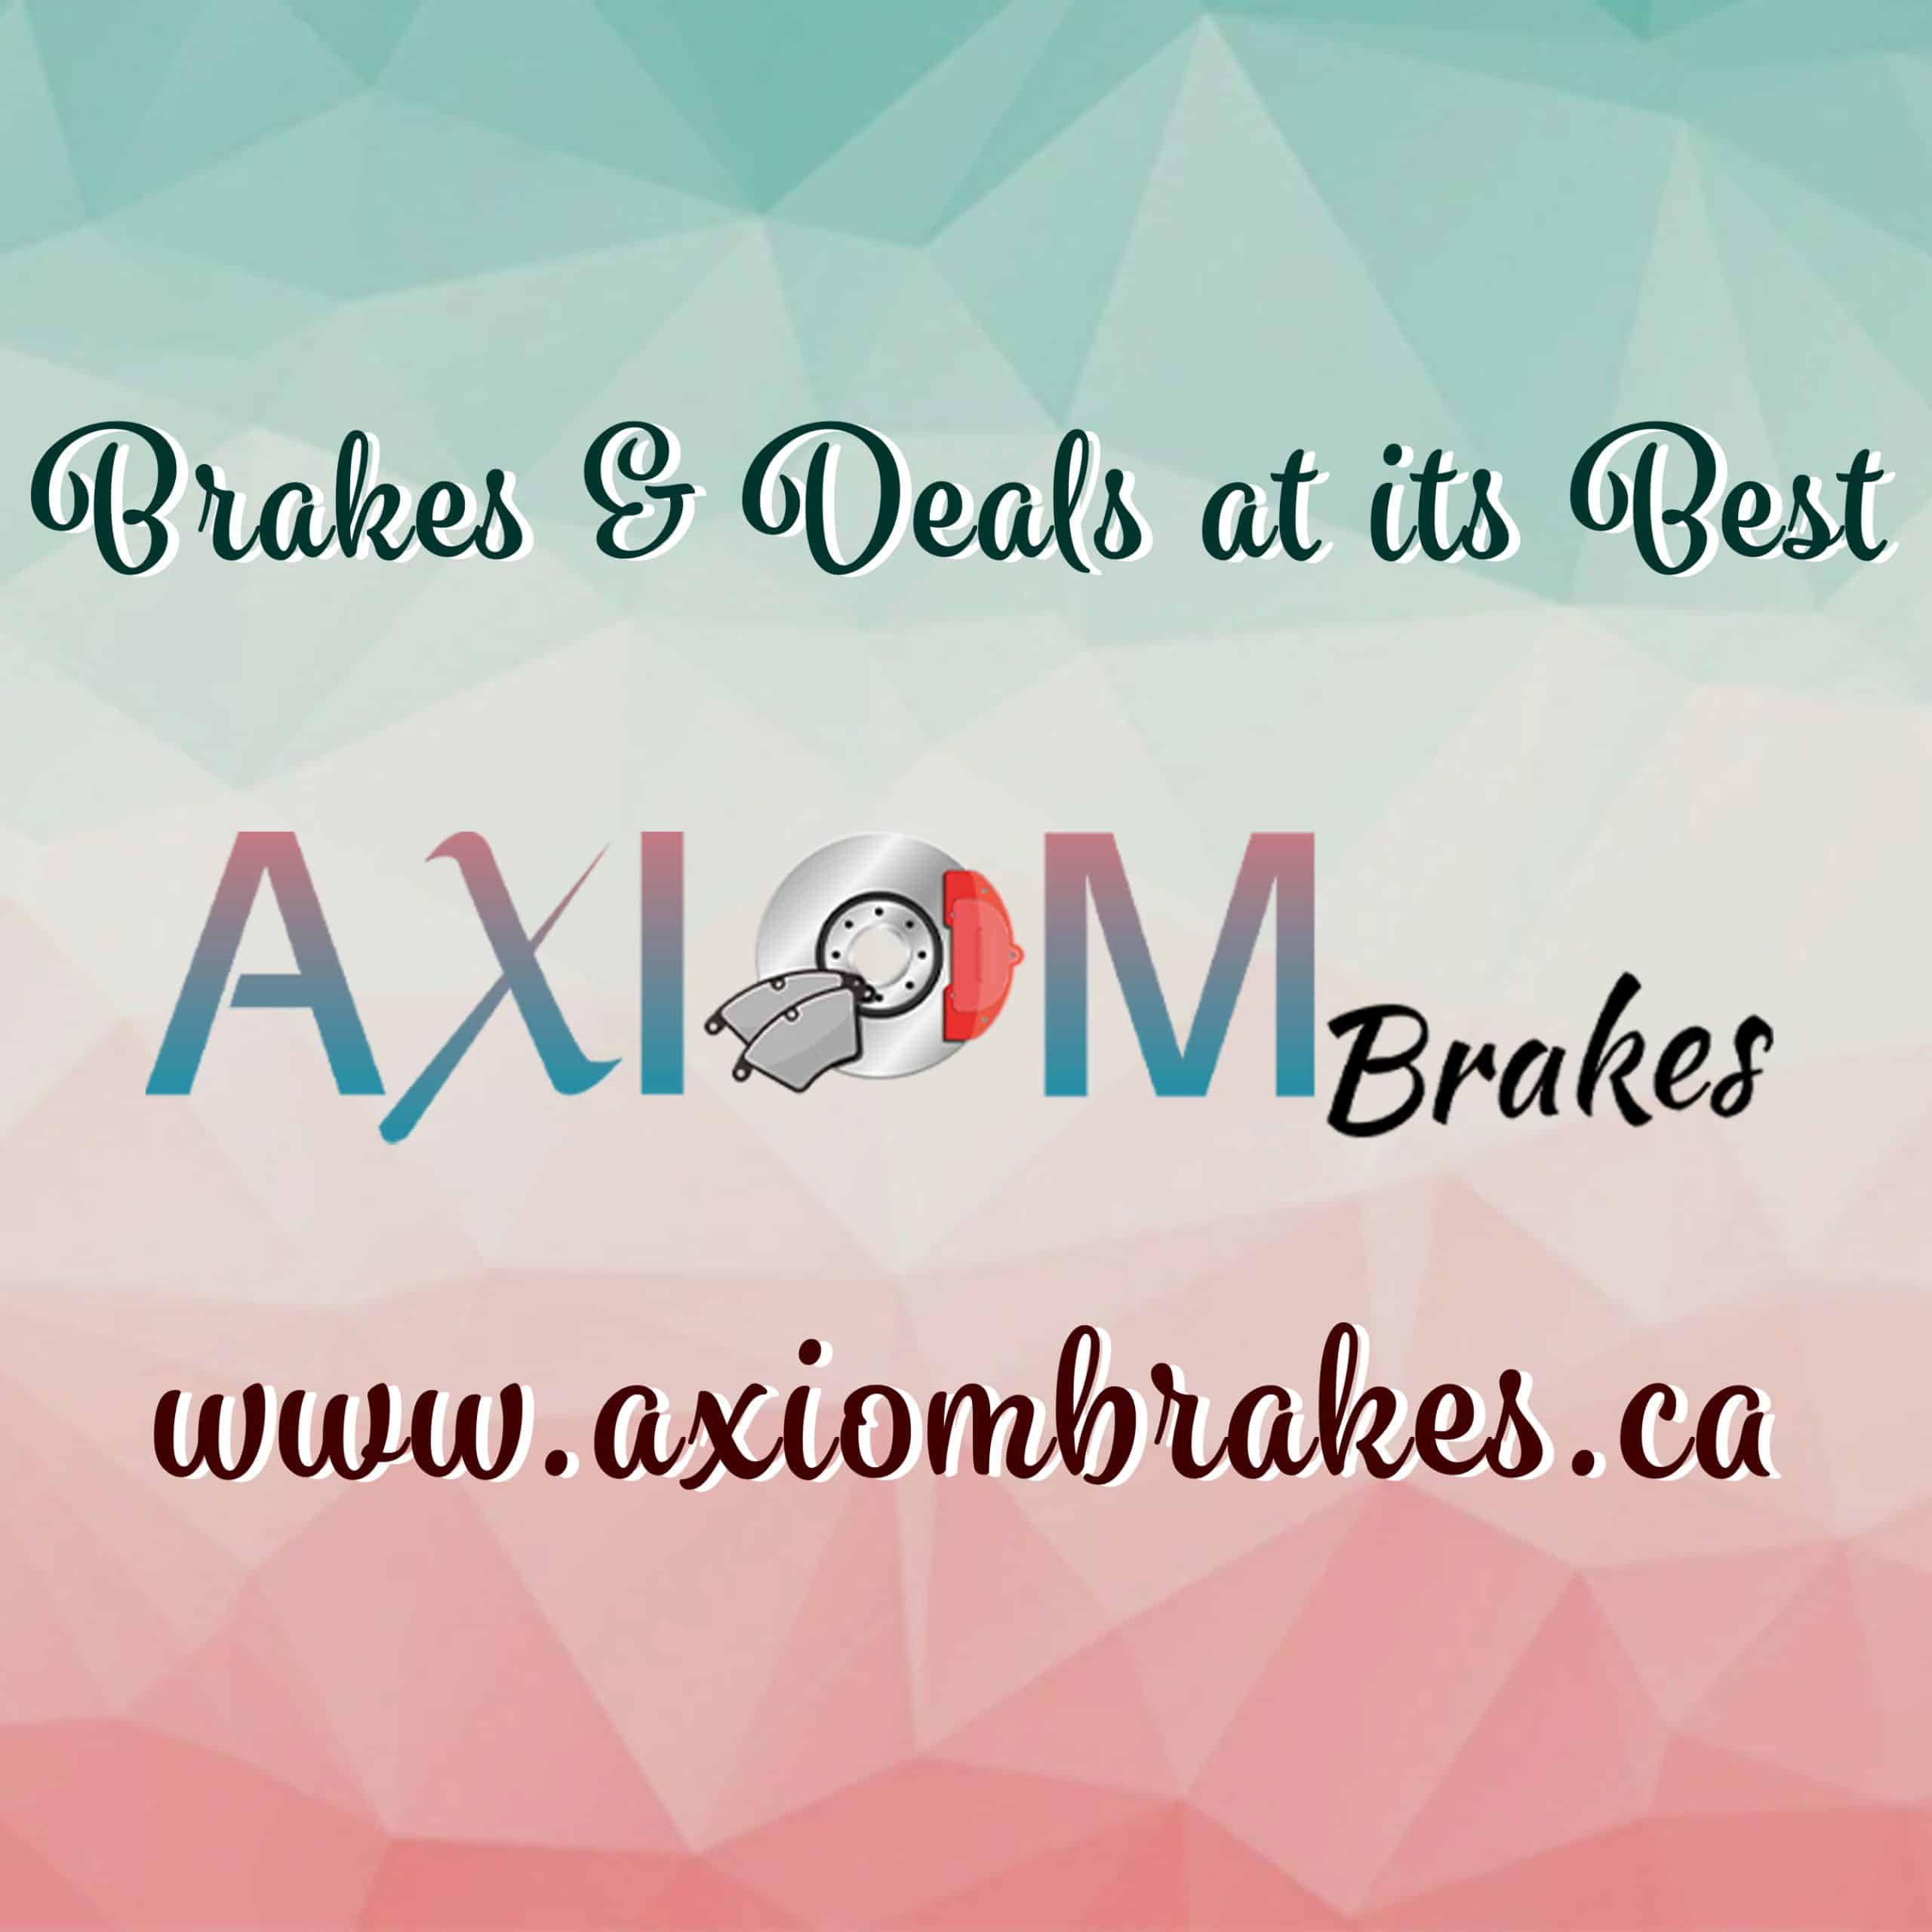 Why Choose AxiomBrakes?